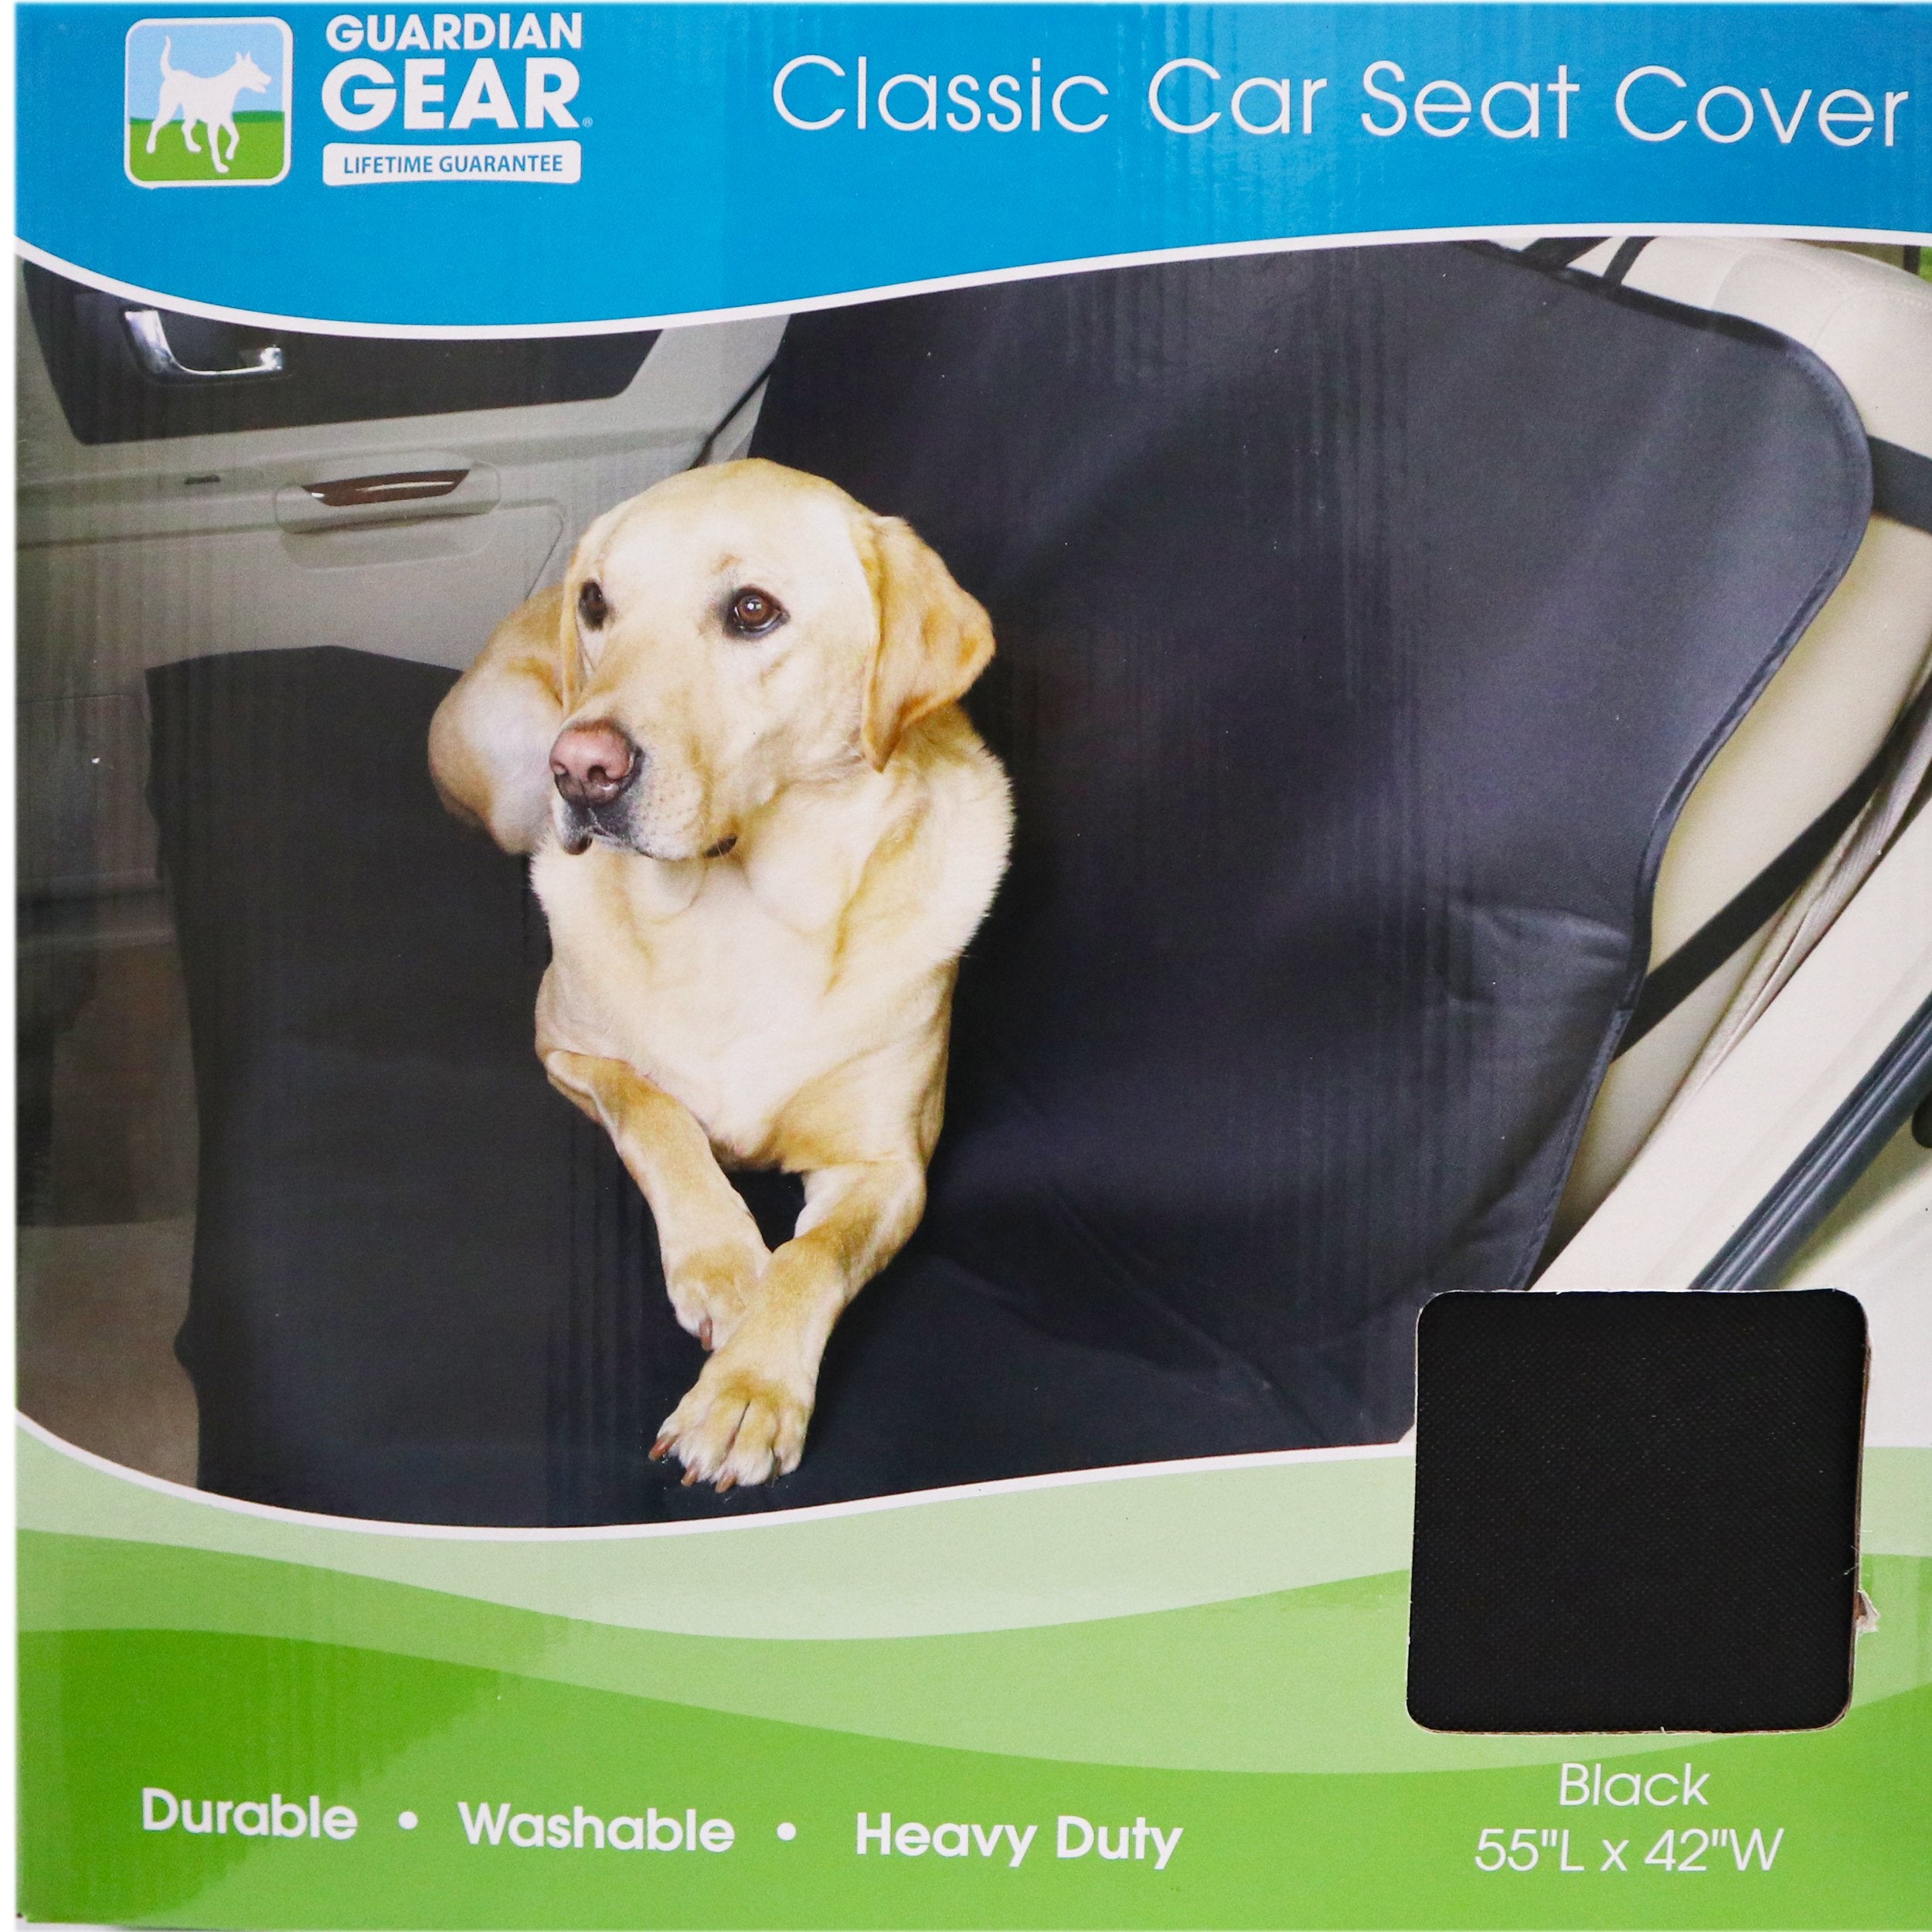 Guardian Gear Heavy Duty Classic Car Seat Cover